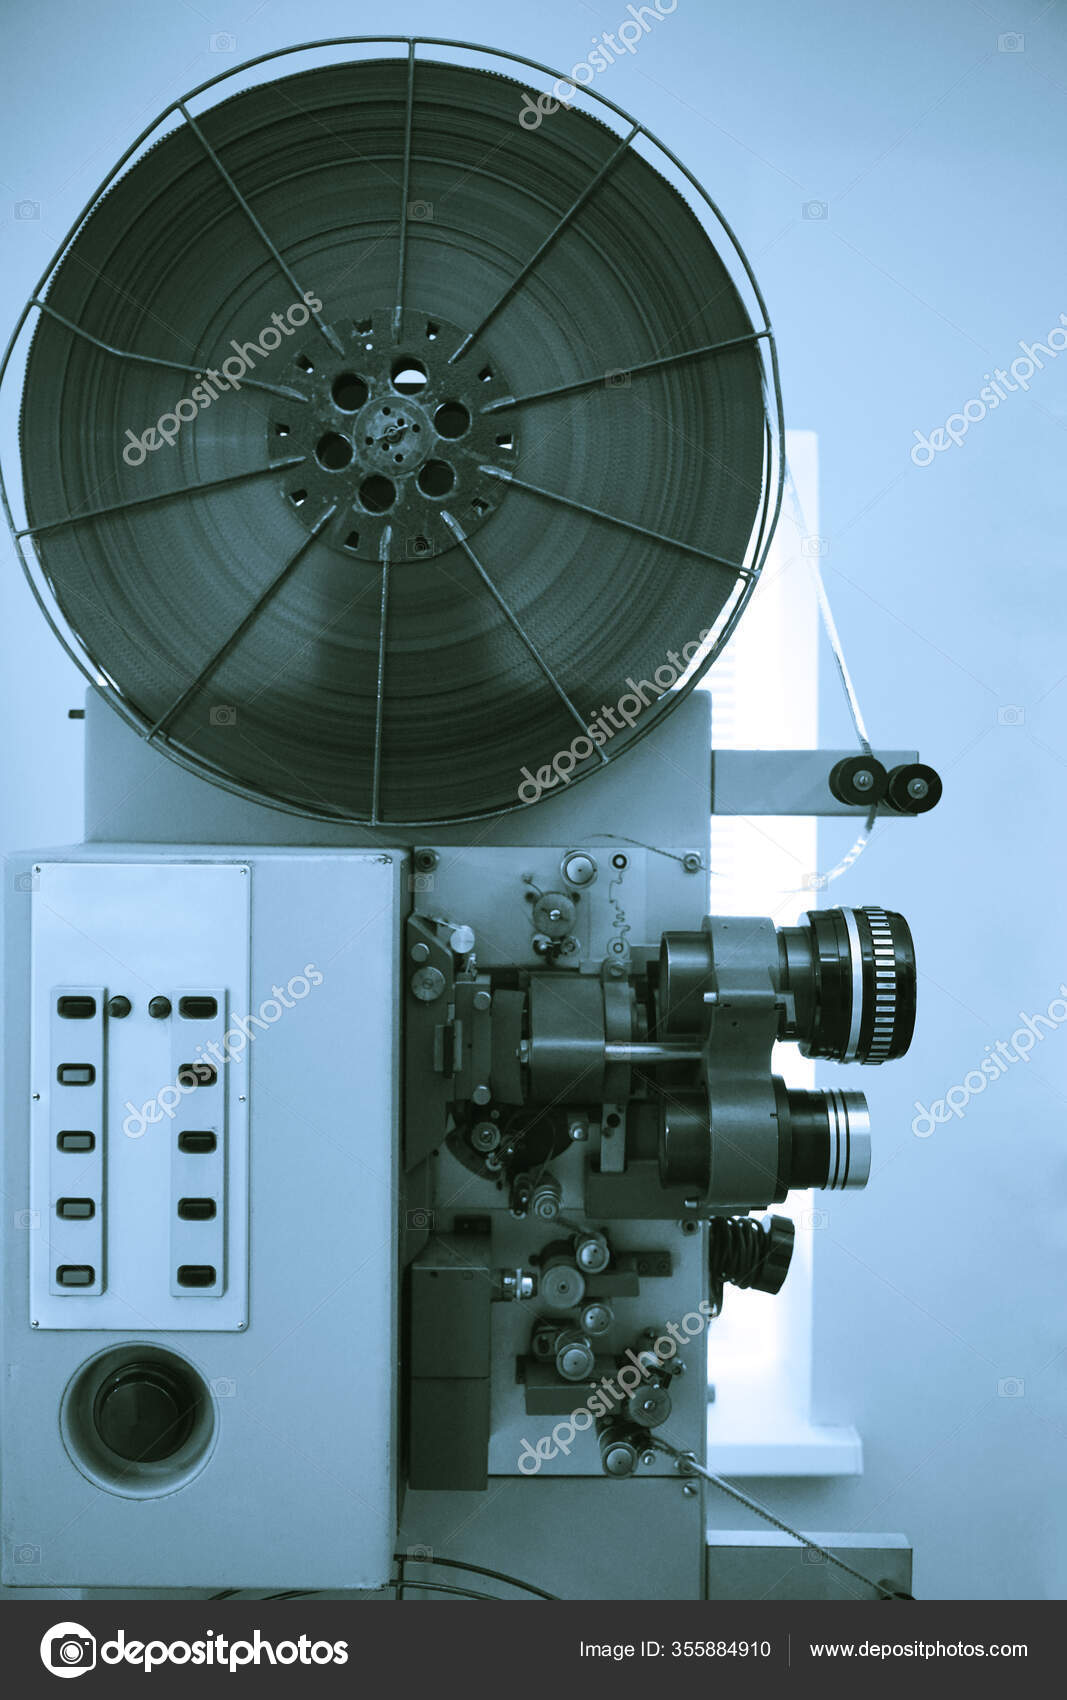 https://st3.depositphotos.com/5647624/35588/i/1600/depositphotos_355884910-stock-photo-old-8mm-film-projector-isolated.jpg